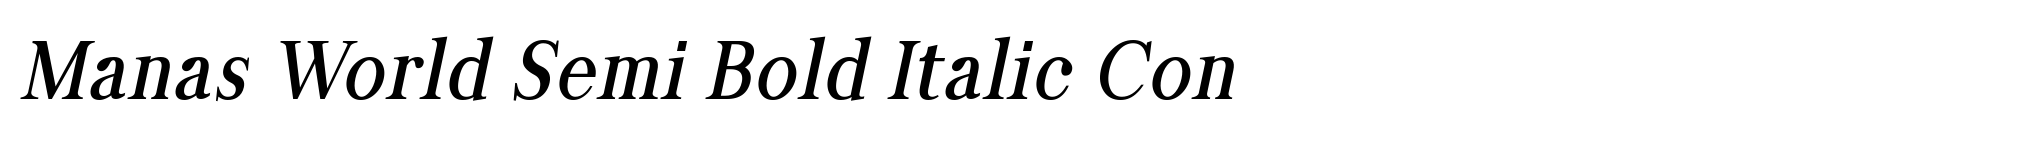 Manas World Semi Bold Italic Con image